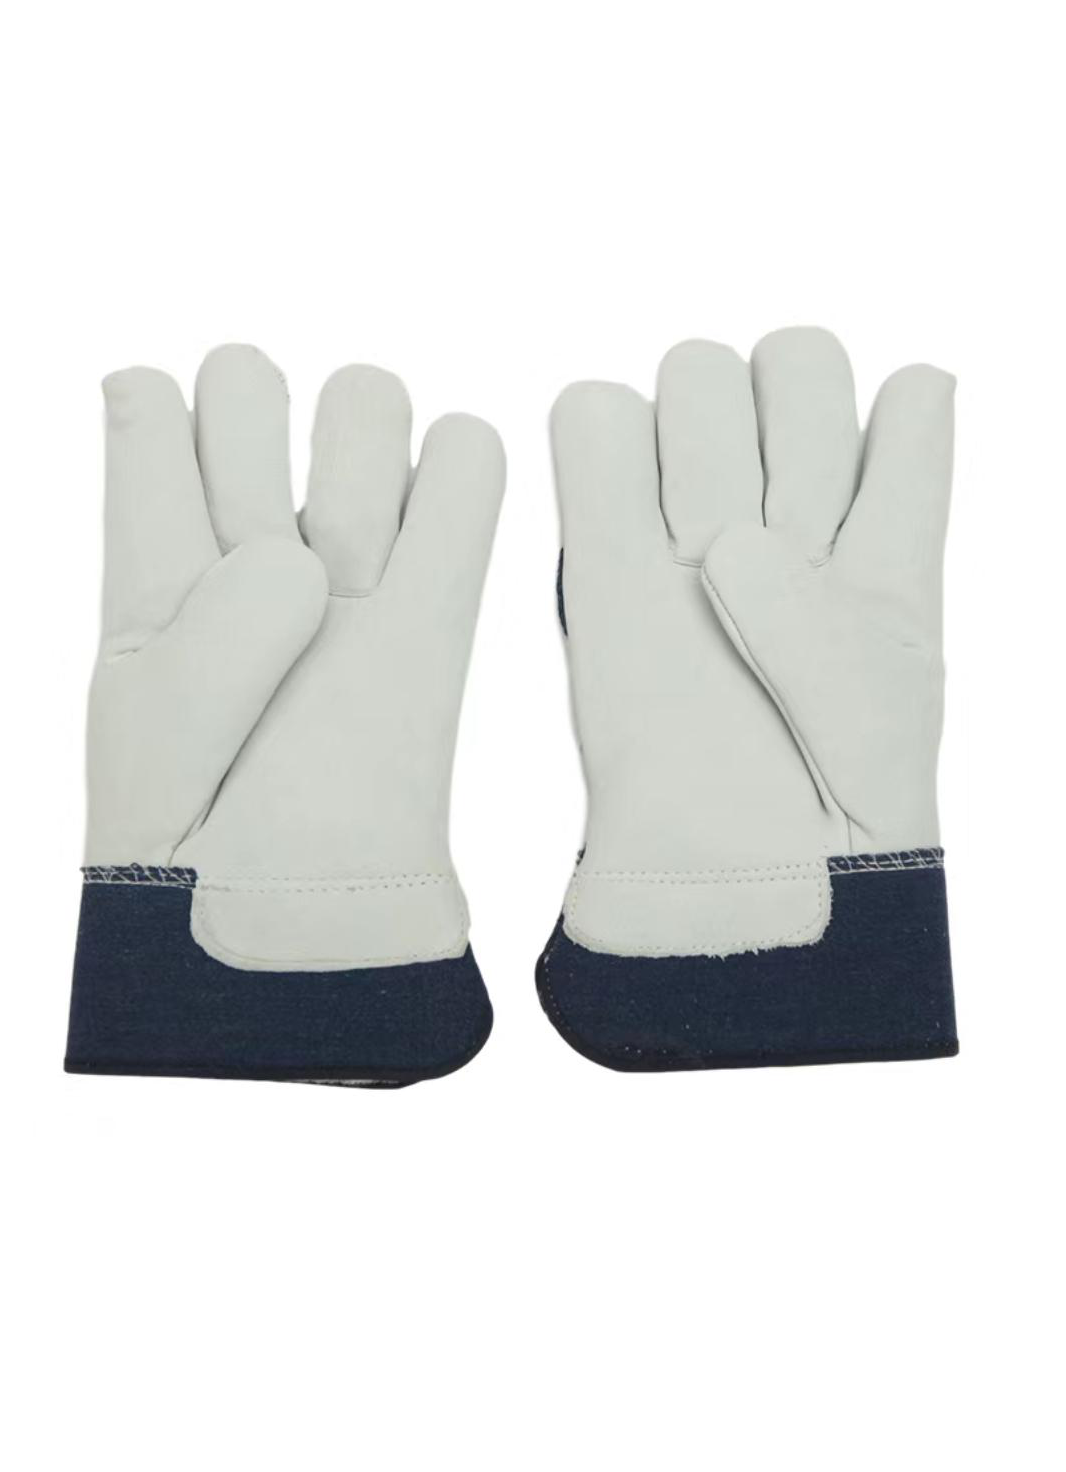 welding safety gloves leather gloves work gloves 4